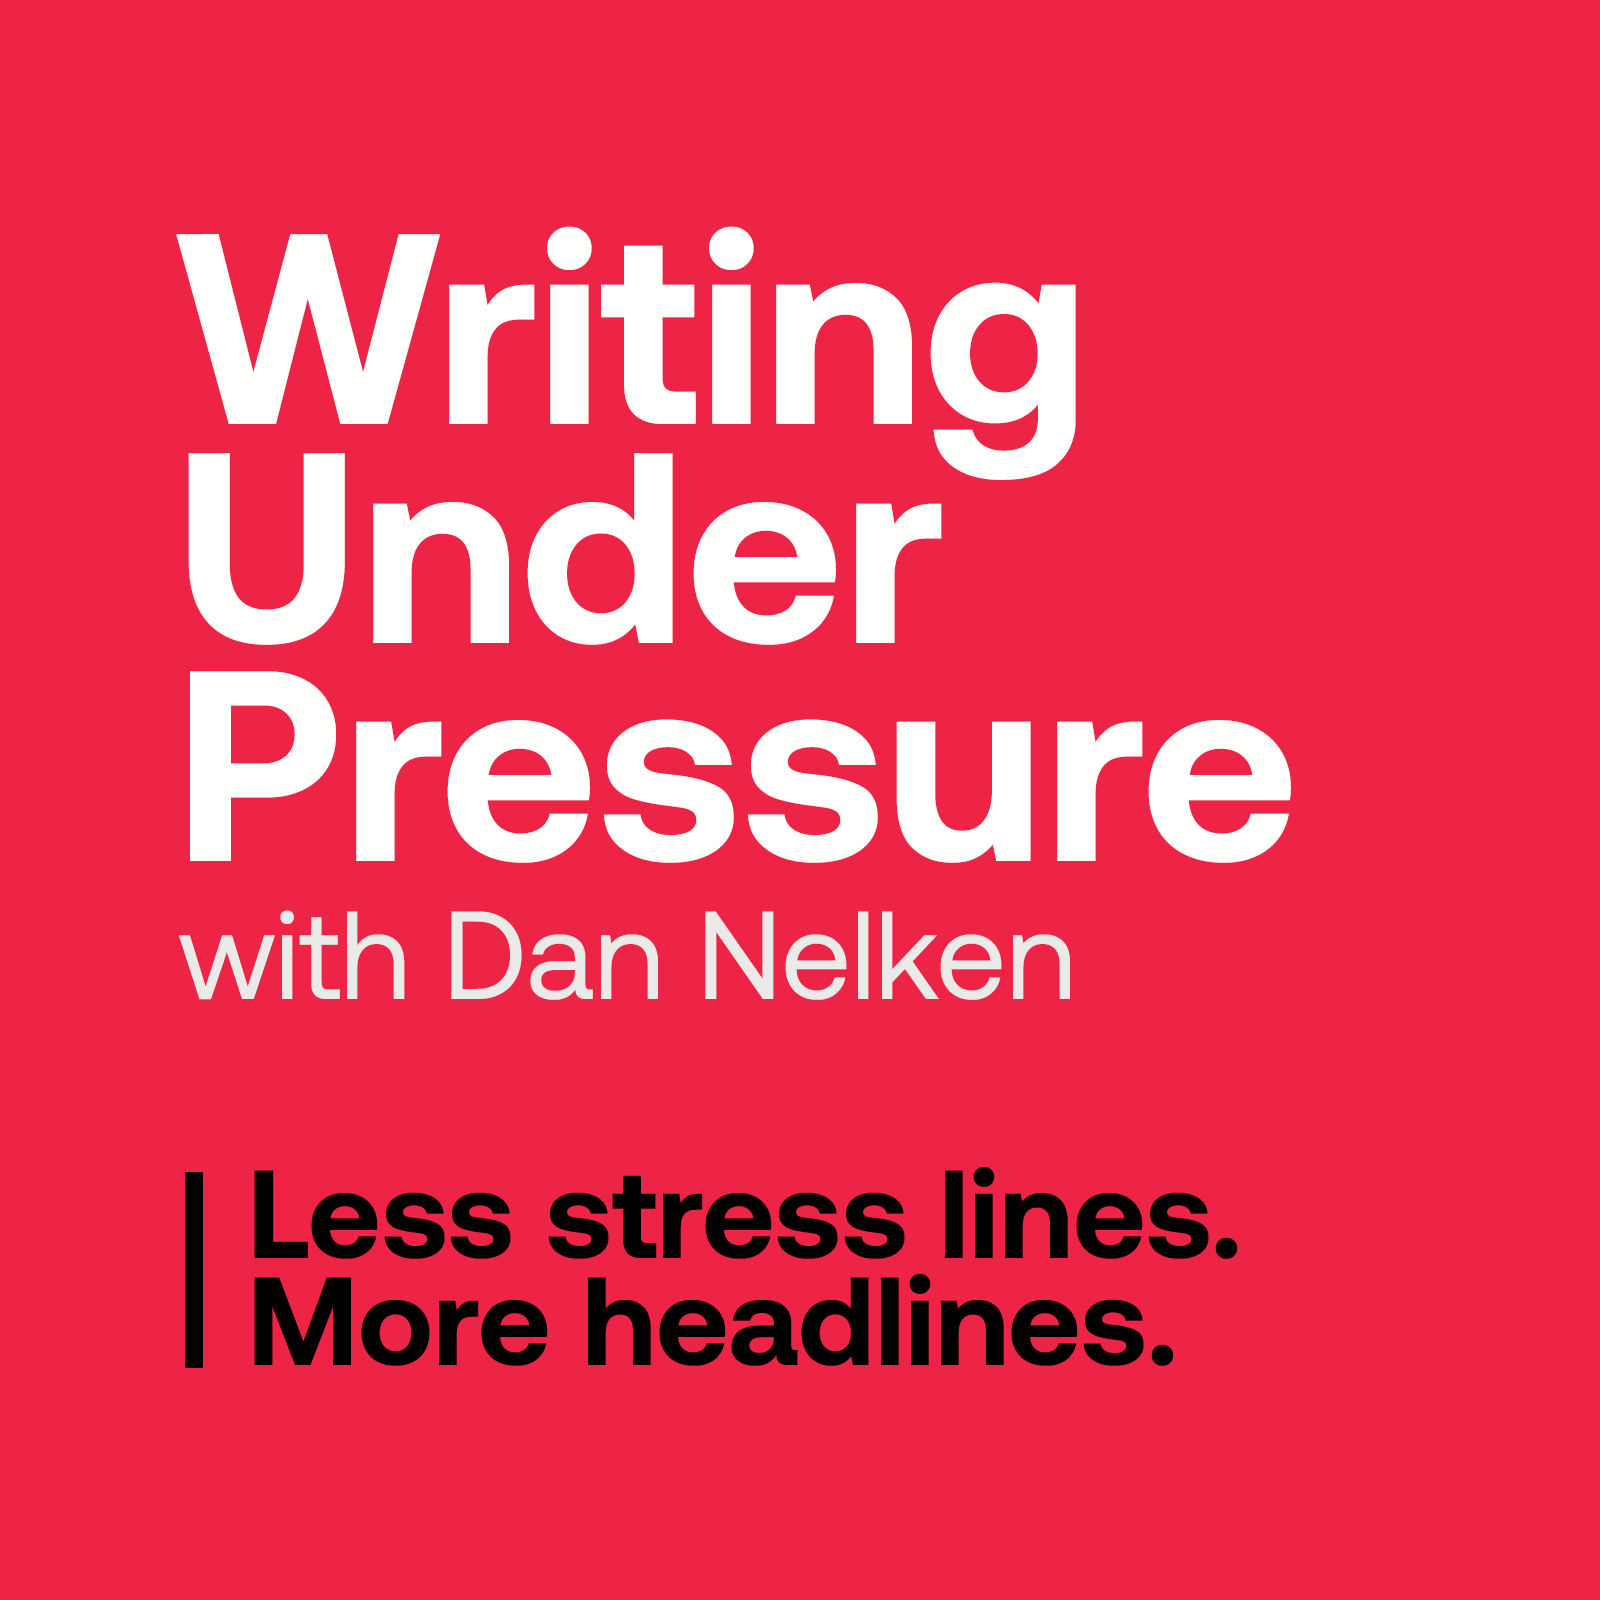 Writing Under Pressure By Dan Nelken - Free Download Course